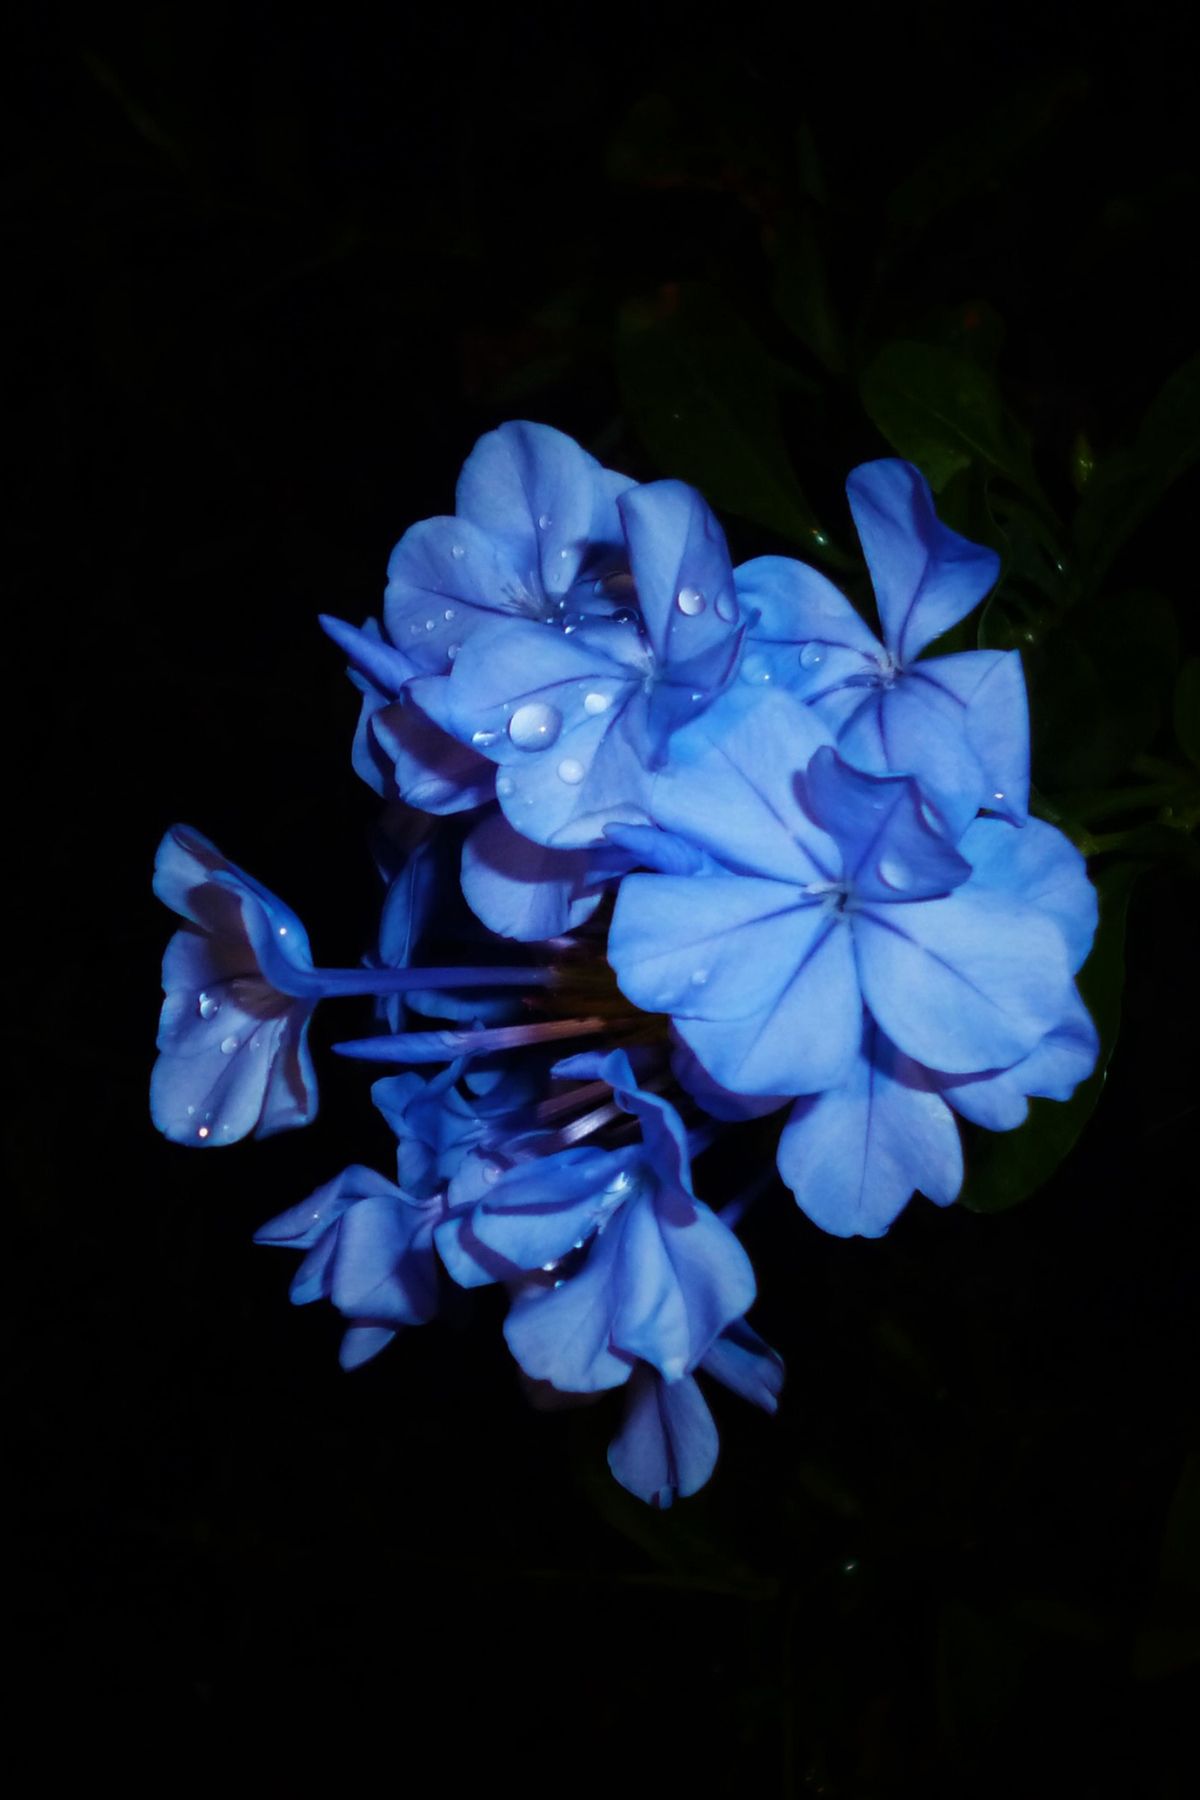 iPhone flowers blue waterdrops 4k mobile wallpaper